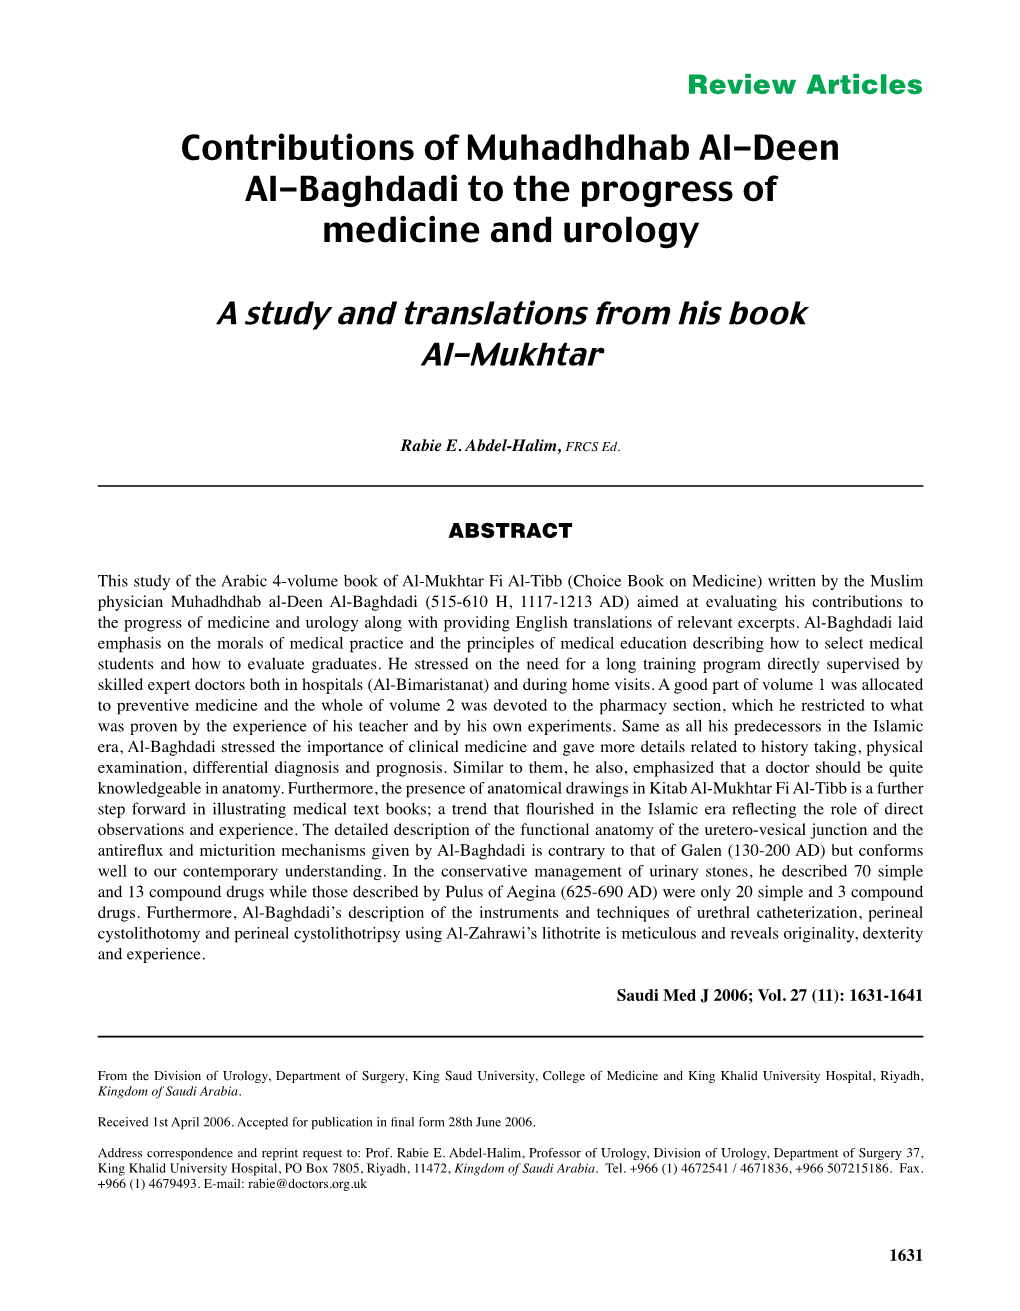 Contributions of Muhadhdhab Al-Deen Al-Baghdadi to the Progress of Medicine and Urology